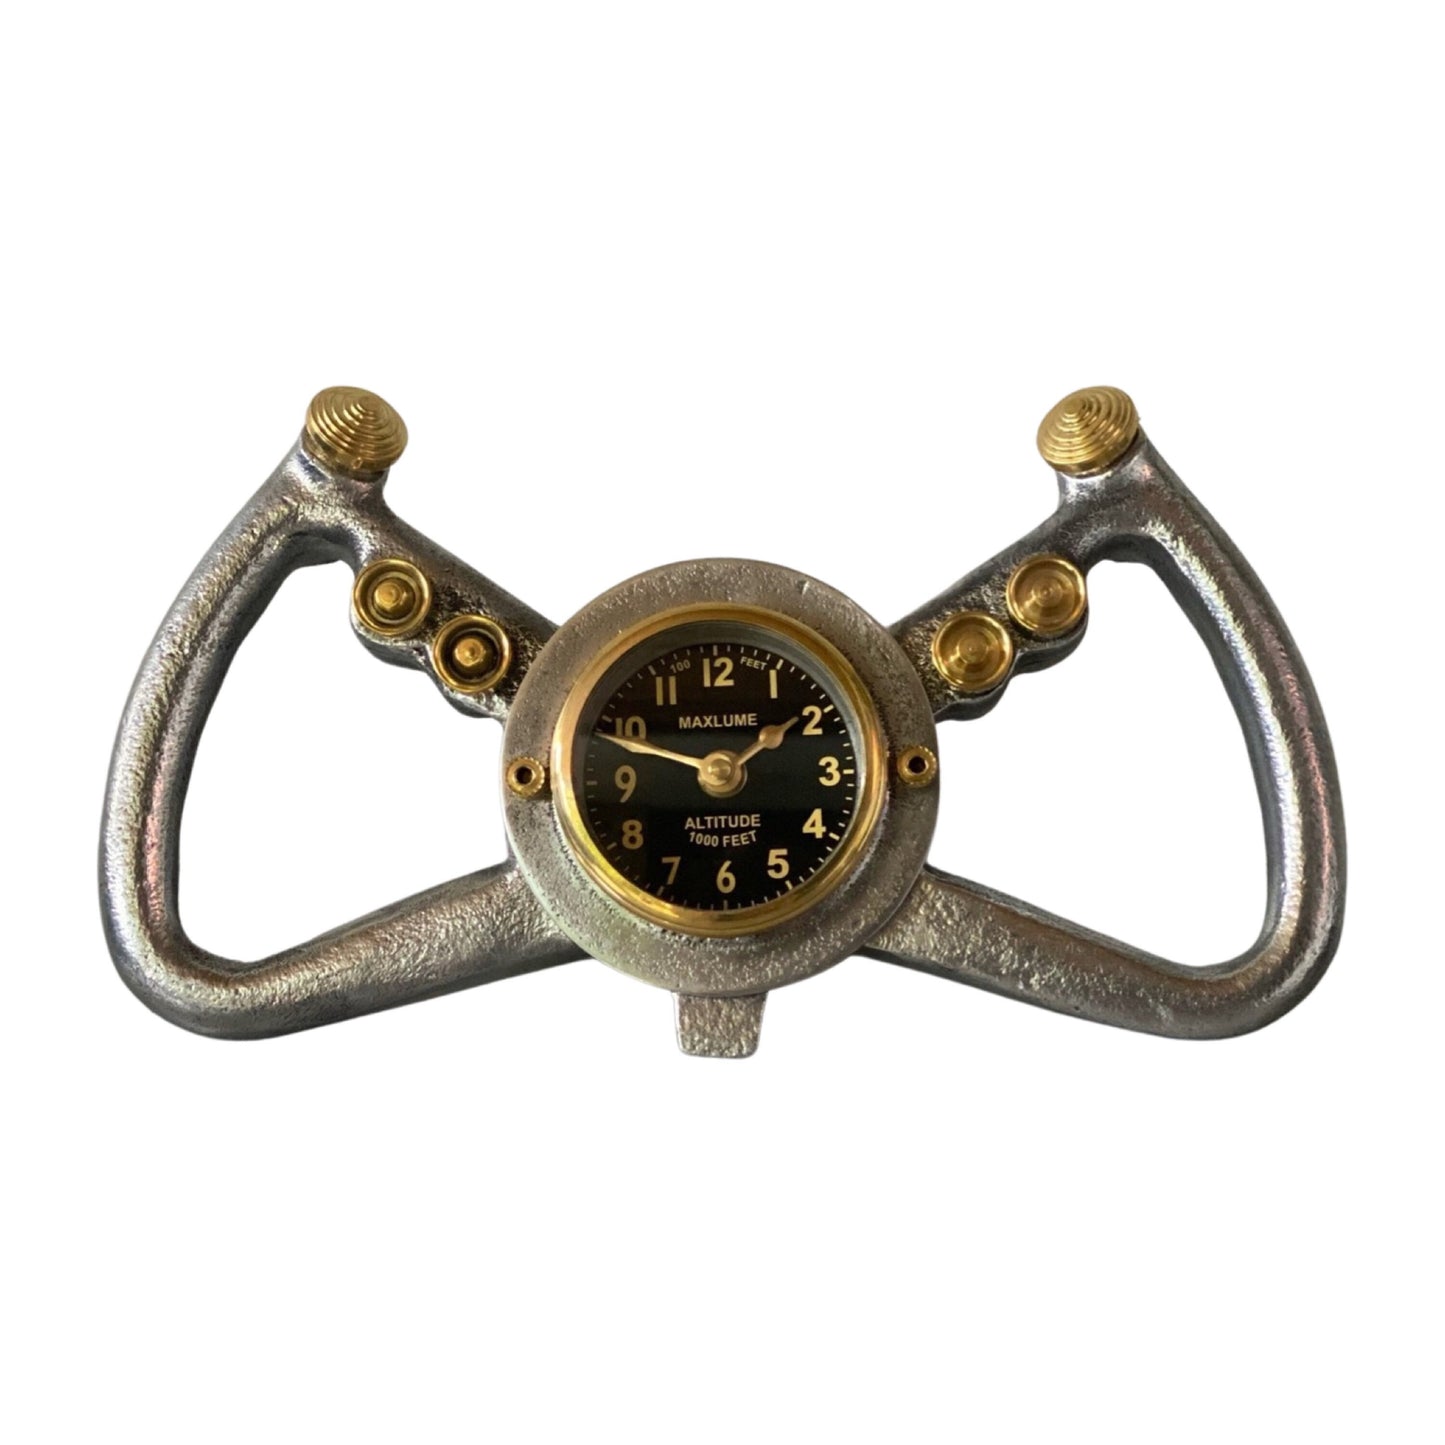 Maxlume ~ Cockpit Pilots Yoke Aviator Solid Brass Ships Clock Compass Nautical Vintage Industrial Pilot Decor